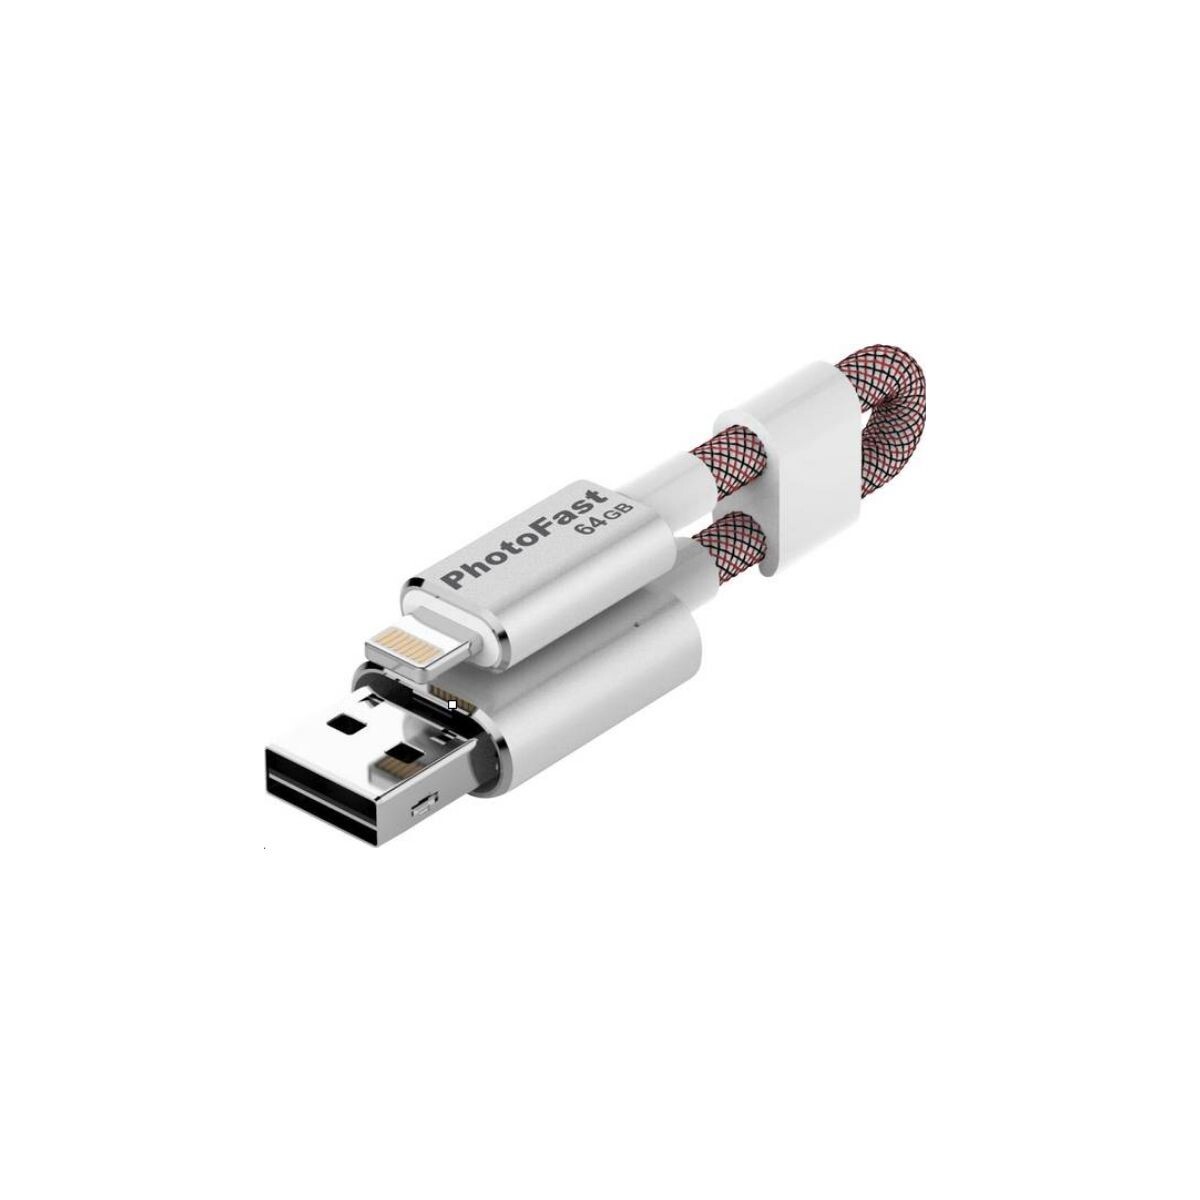 PhotoFast memory cable USB 3.0 3ra generación 